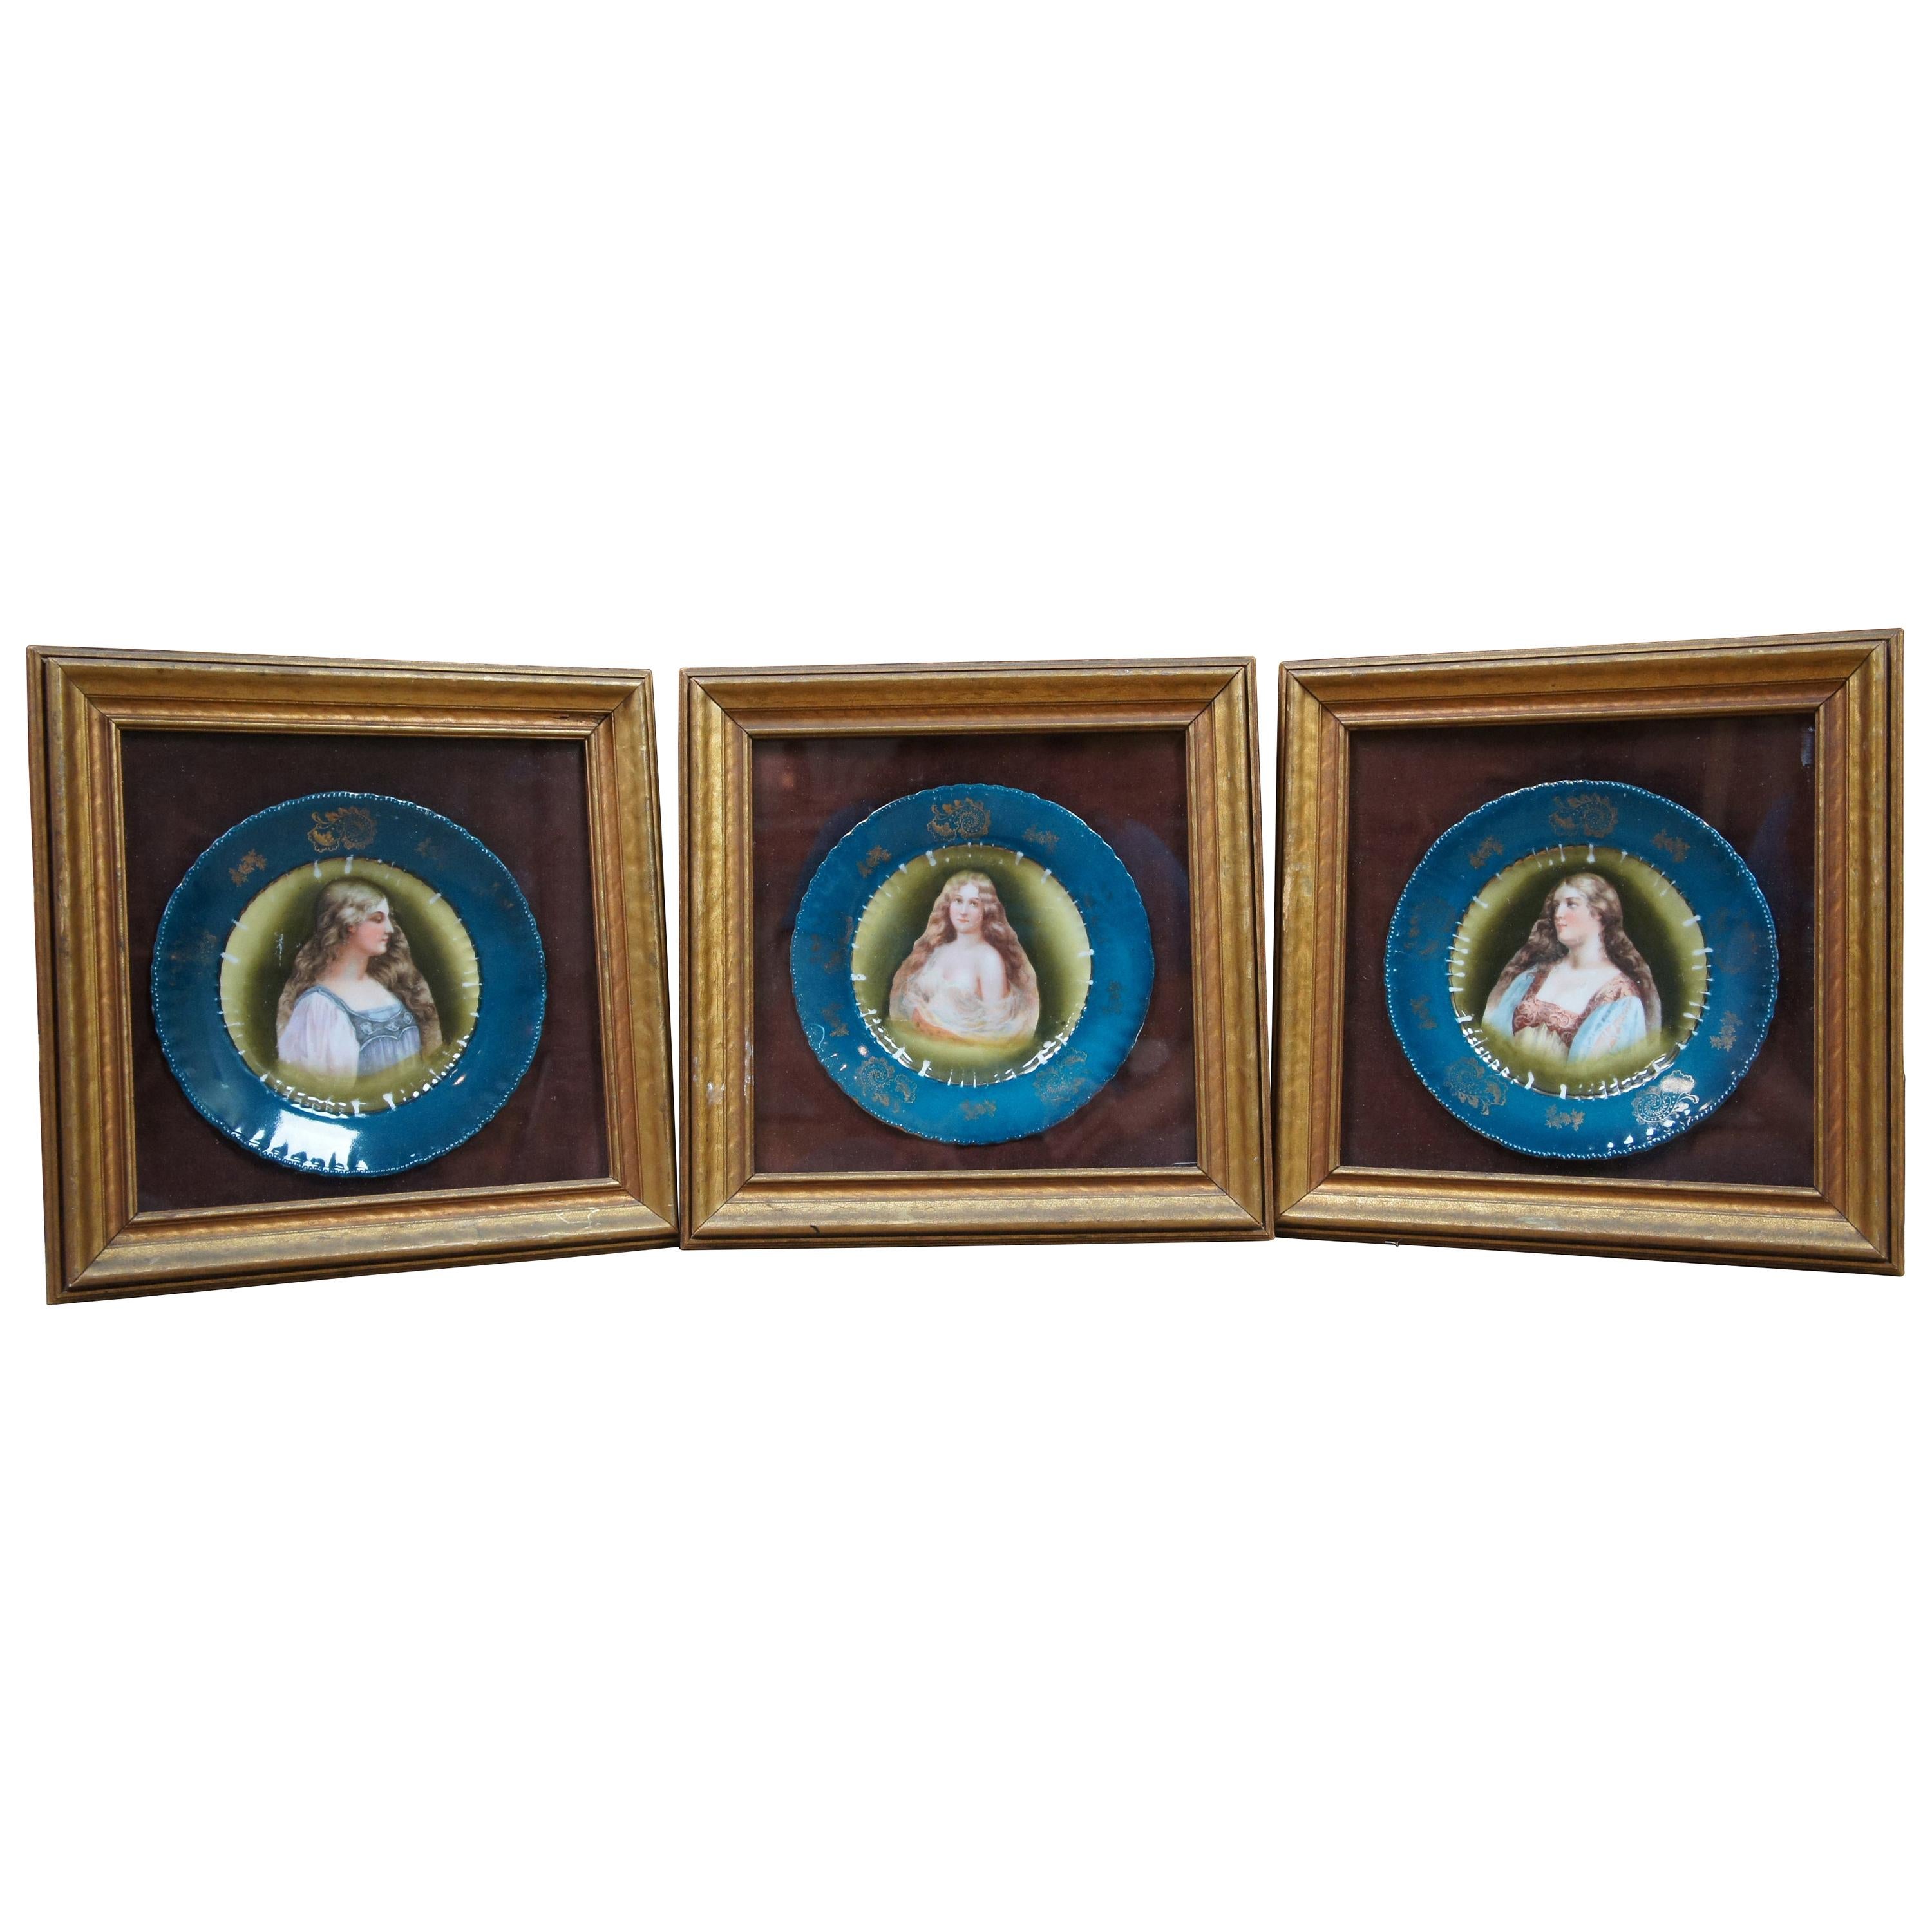 3 Antique Victoria Austria Transferware China Renaissance Portrait Plates